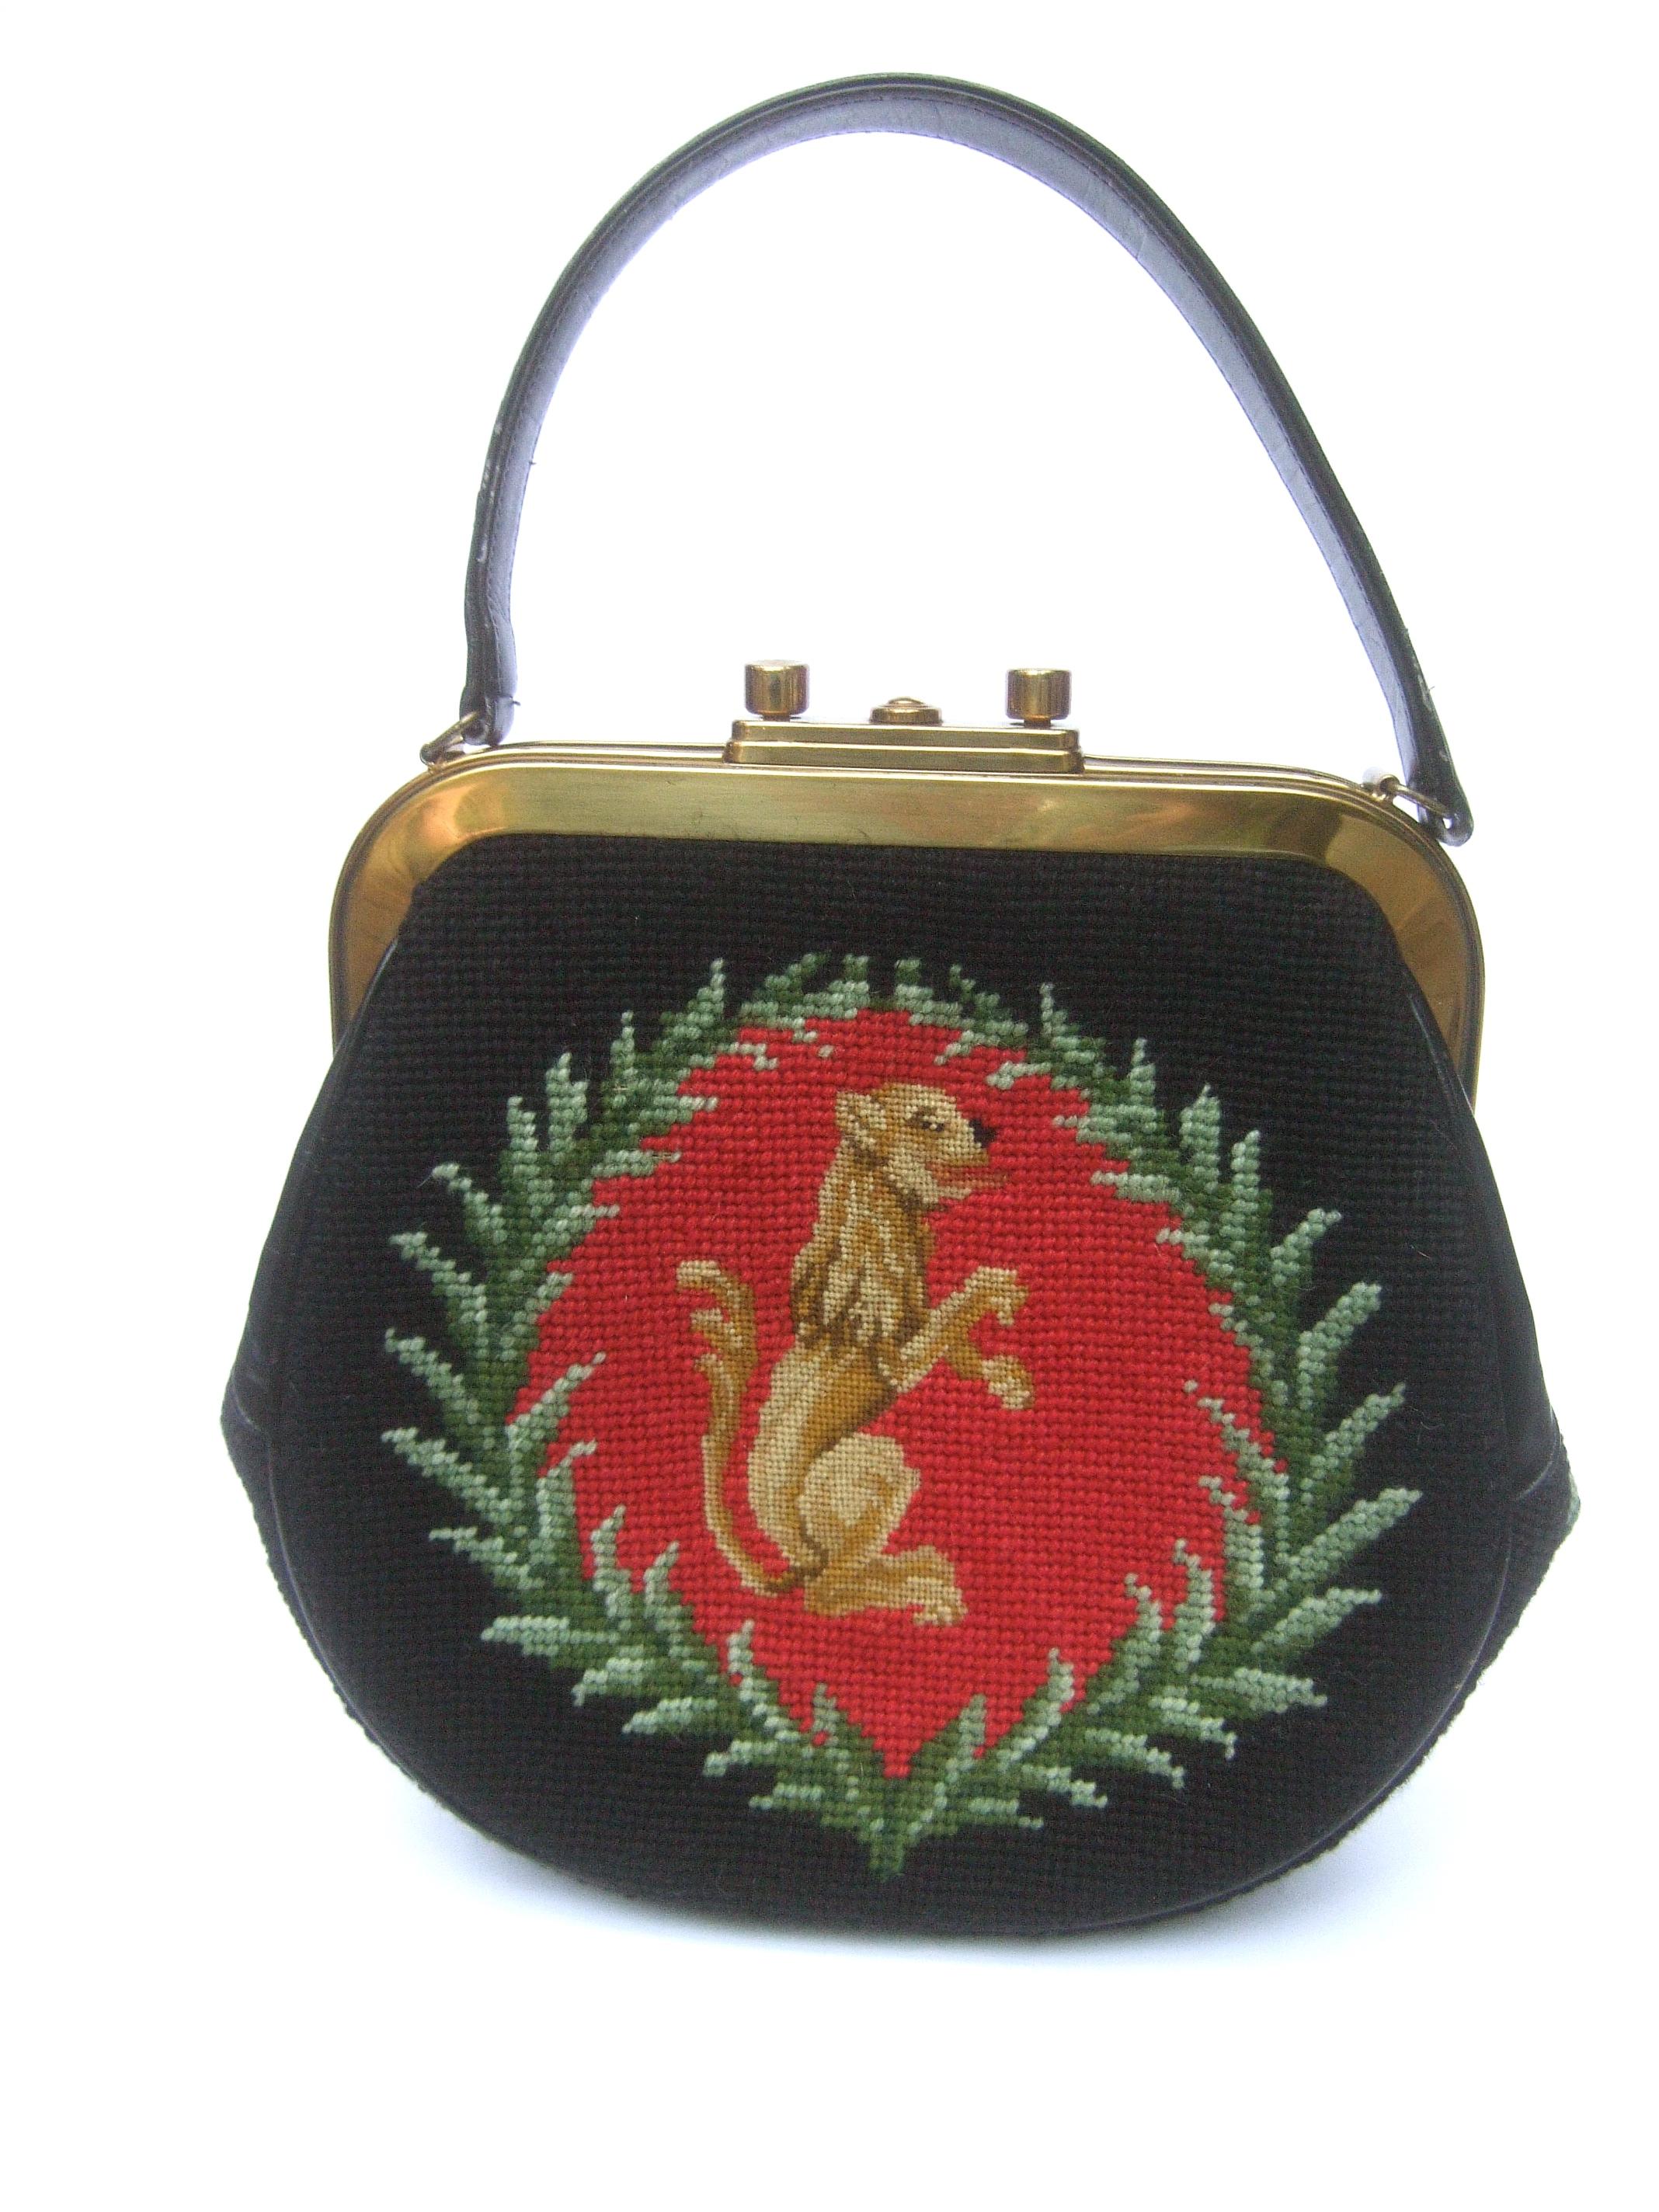 Needlepoint Artisan Griffin & Laurels Hand Stitched Handbag c 1970 For Sale 4